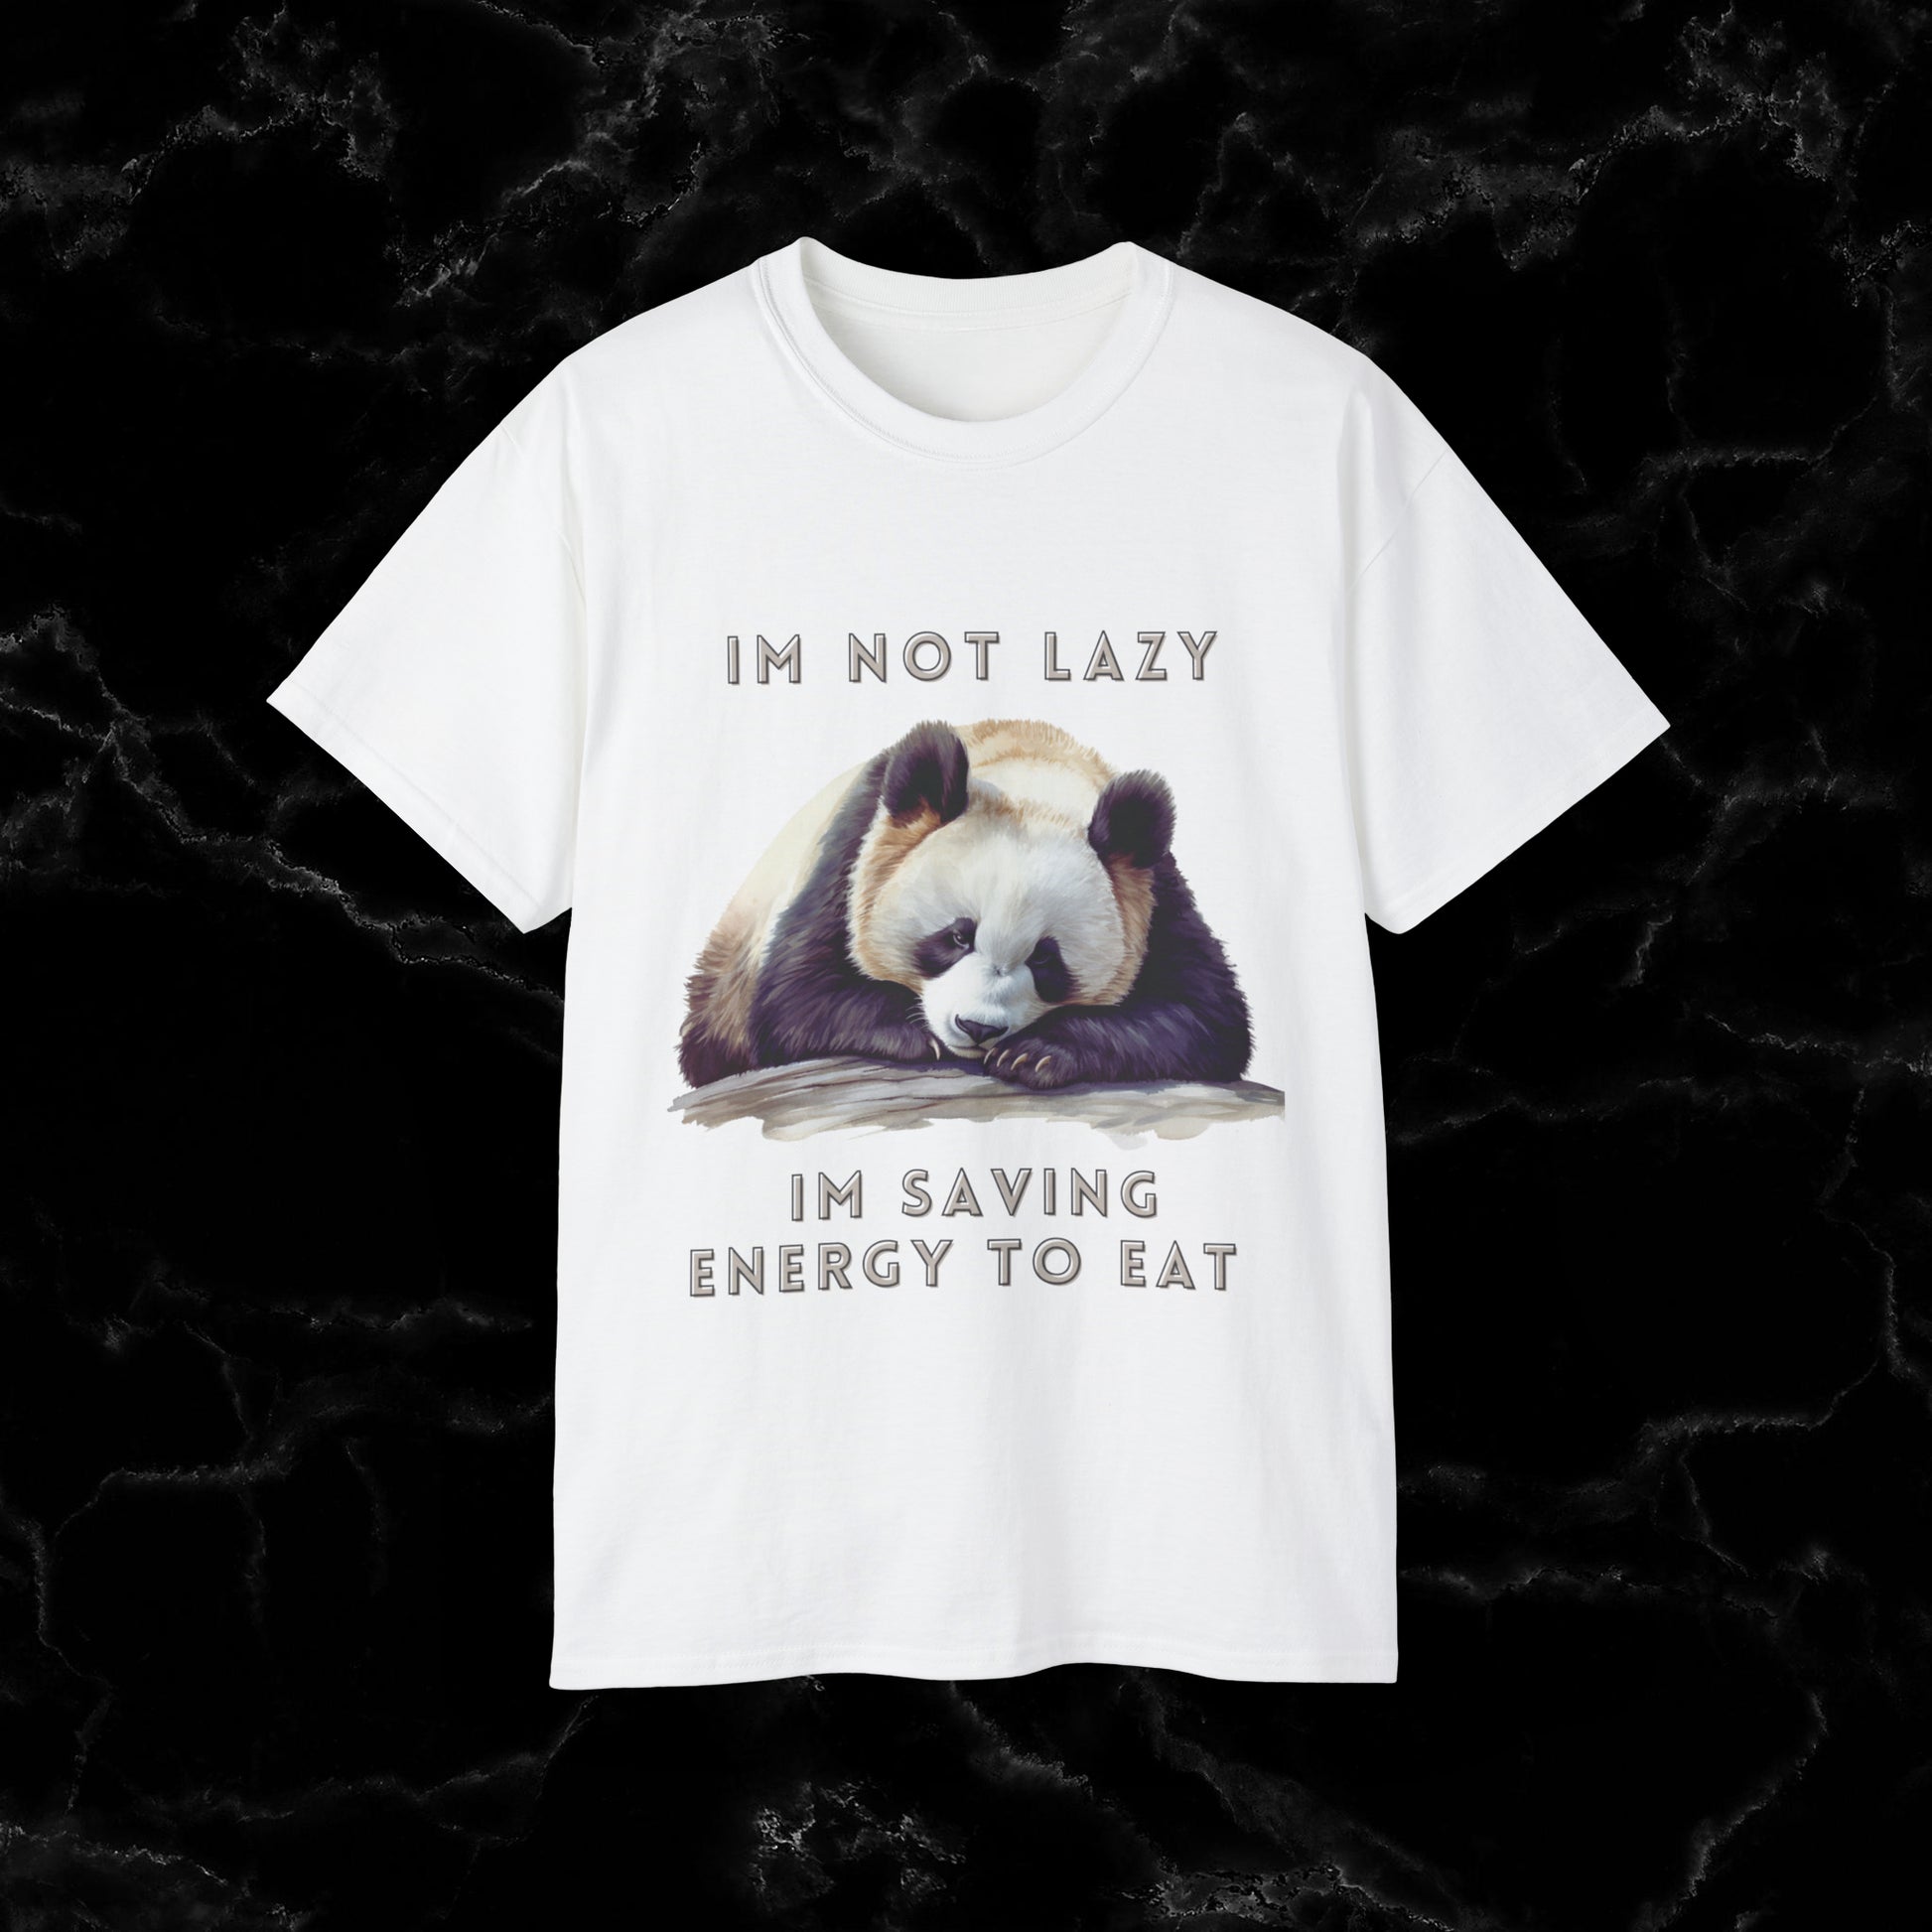 Nap Time Panda Unisex Funny Tee - Hilarious Panda Nap Design - I'm Not Lazy, I'm Saving Energy to Eat T-Shirt White S 